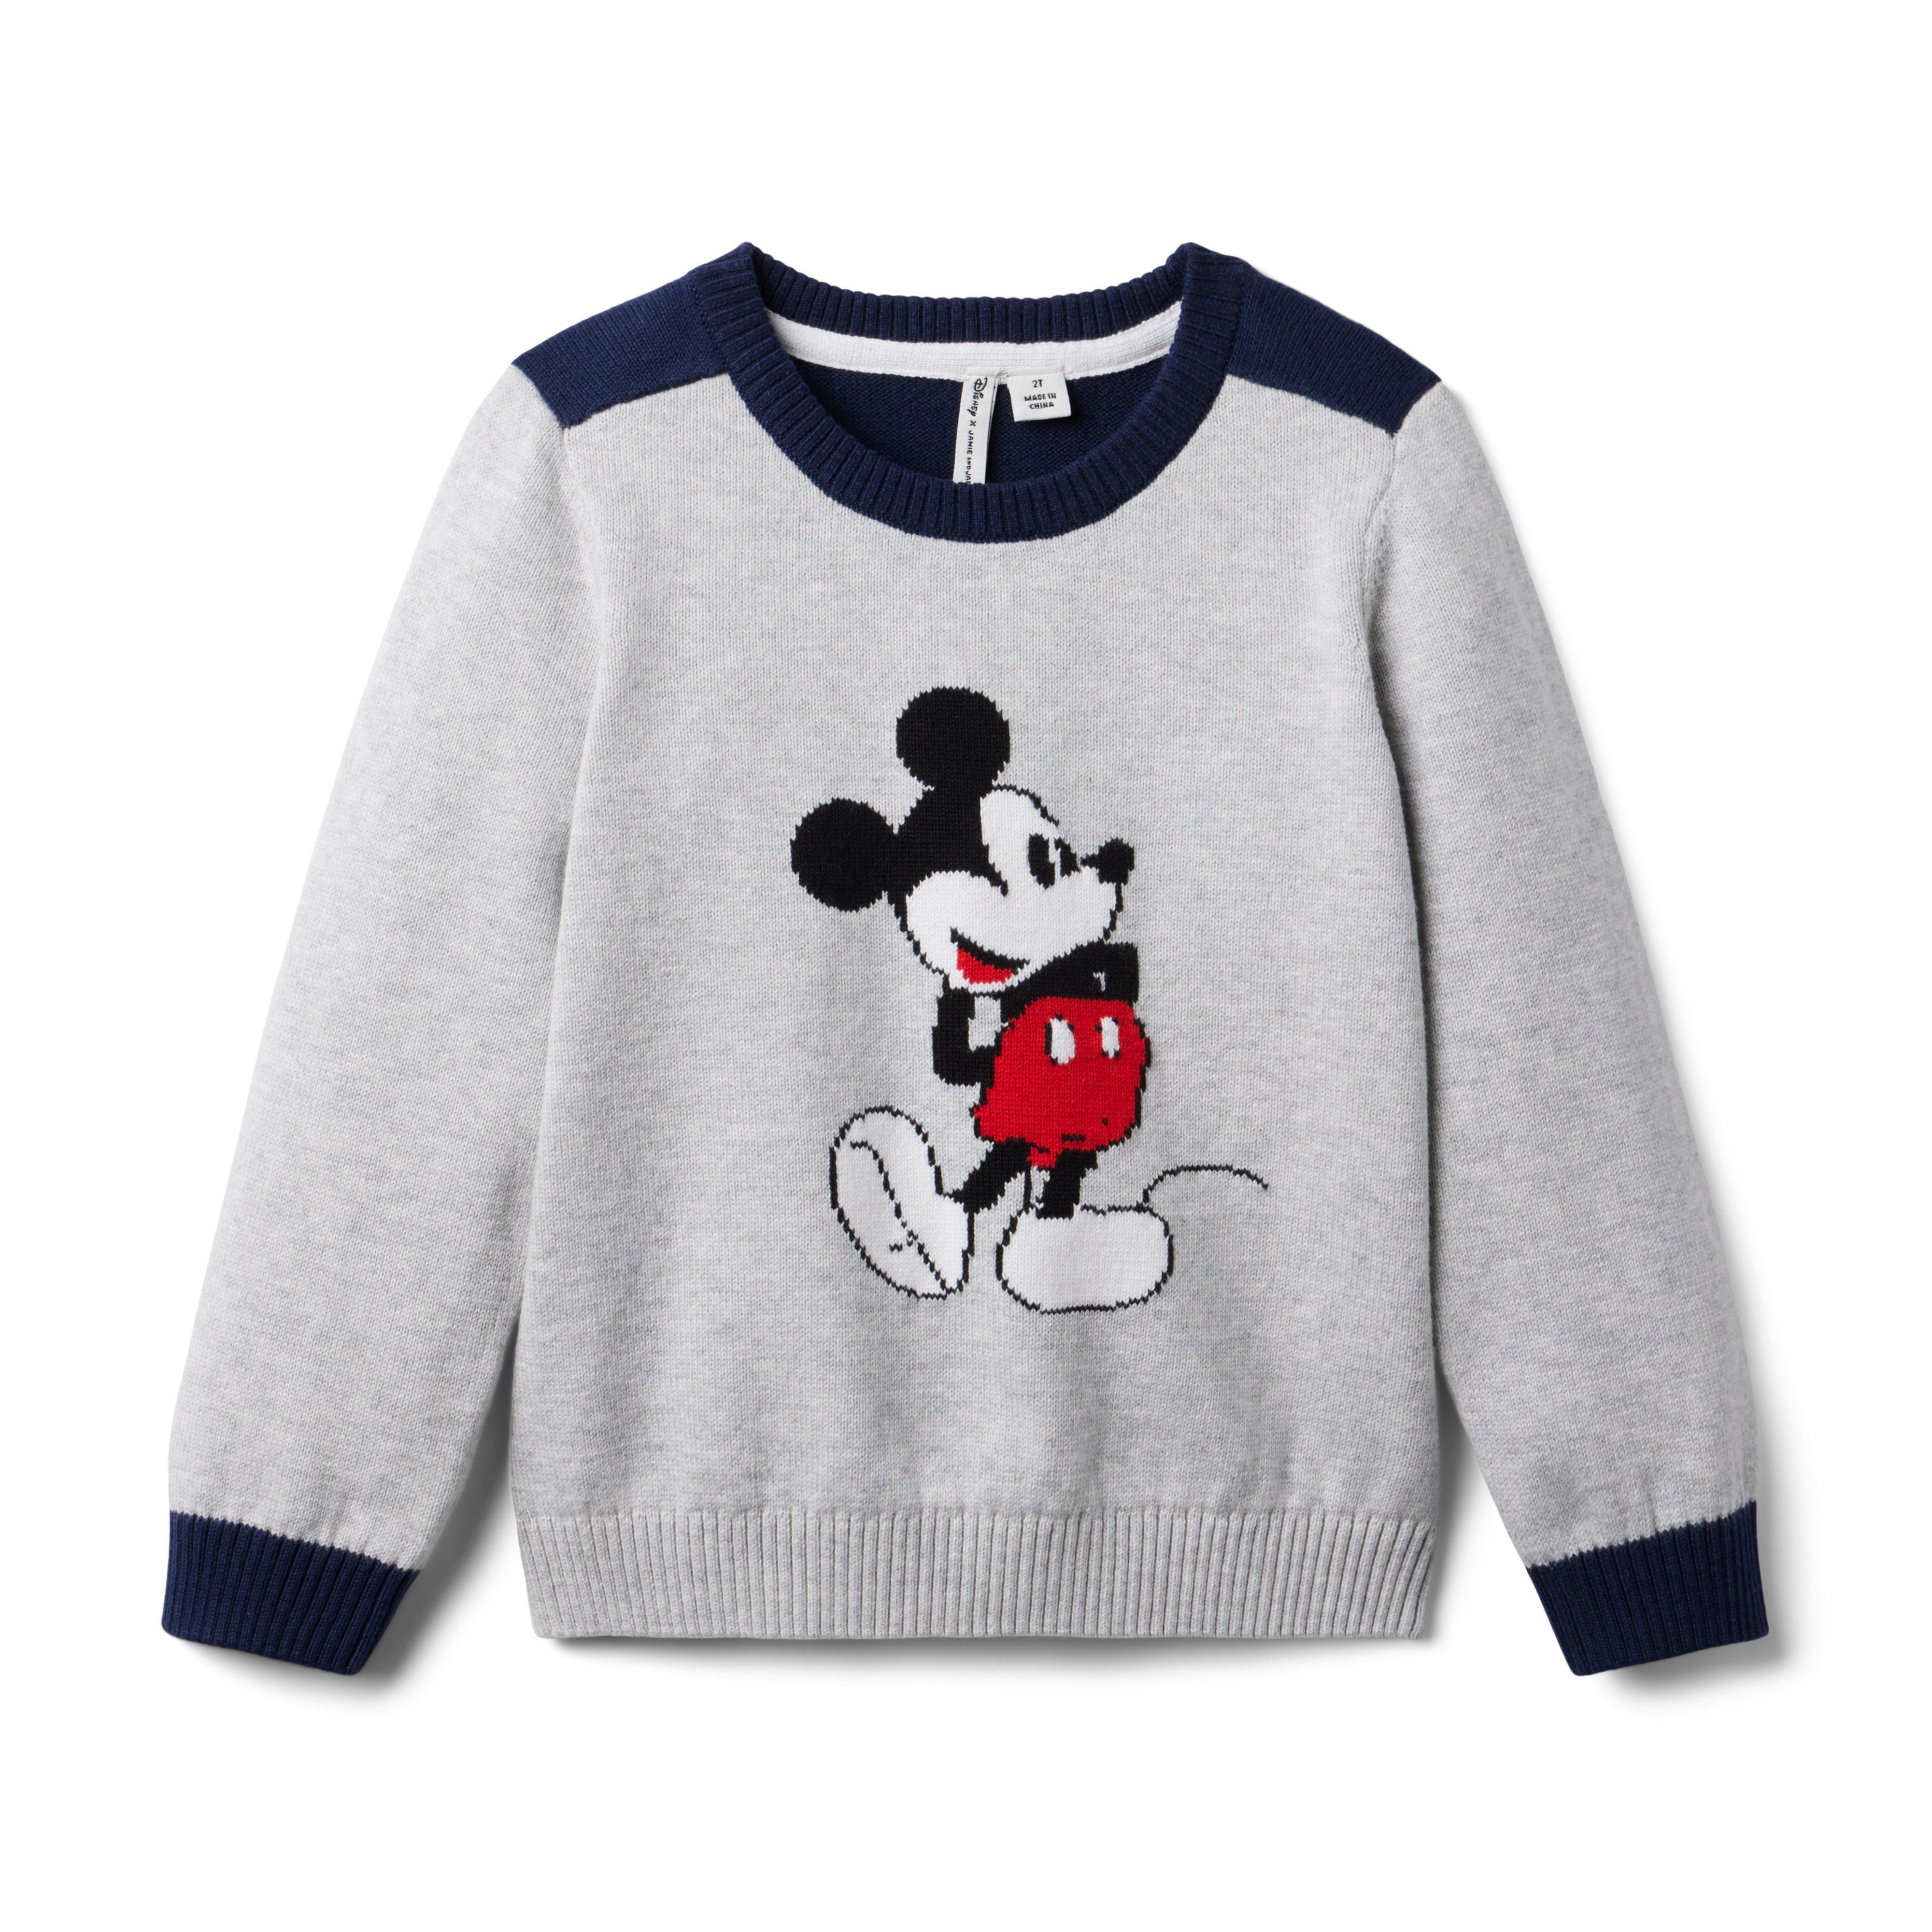 Boy Early Grey Heather Disney Mickey Mouse Sweater by Janie and Jack